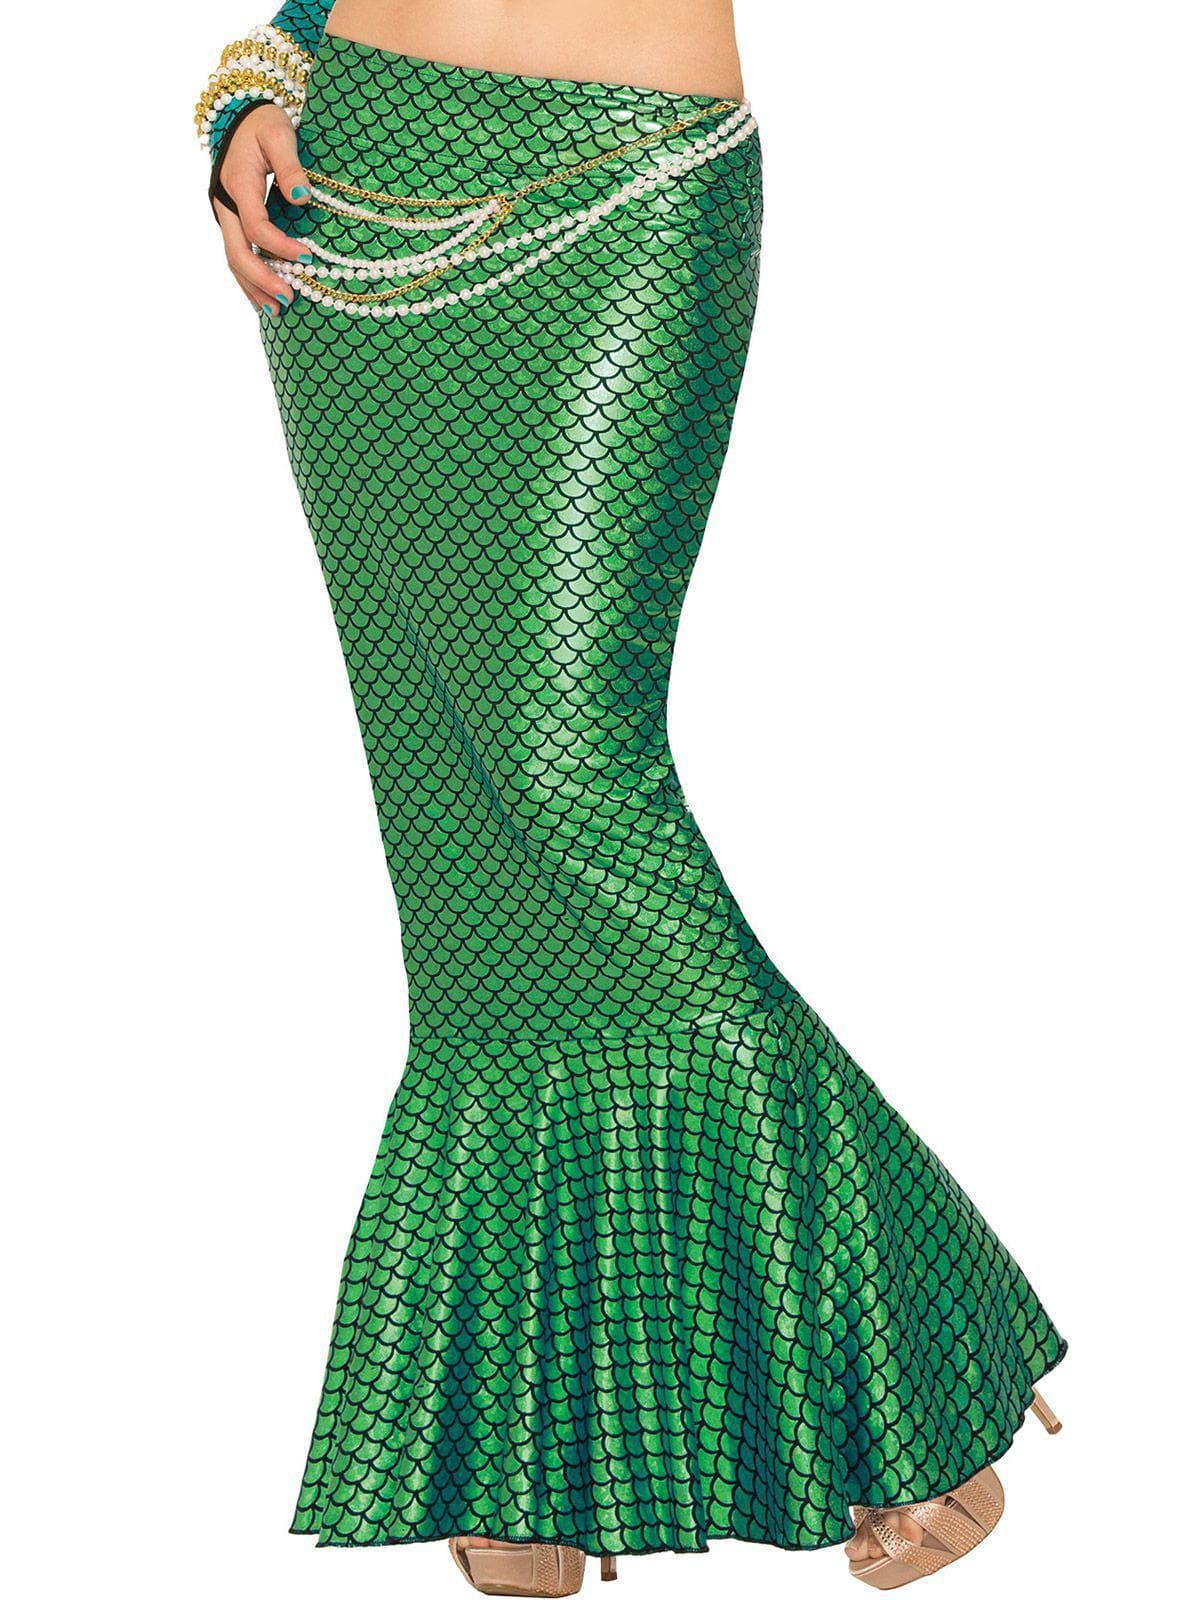 Adult Sexy Green Mermaid Skirt Costume - costumes.com